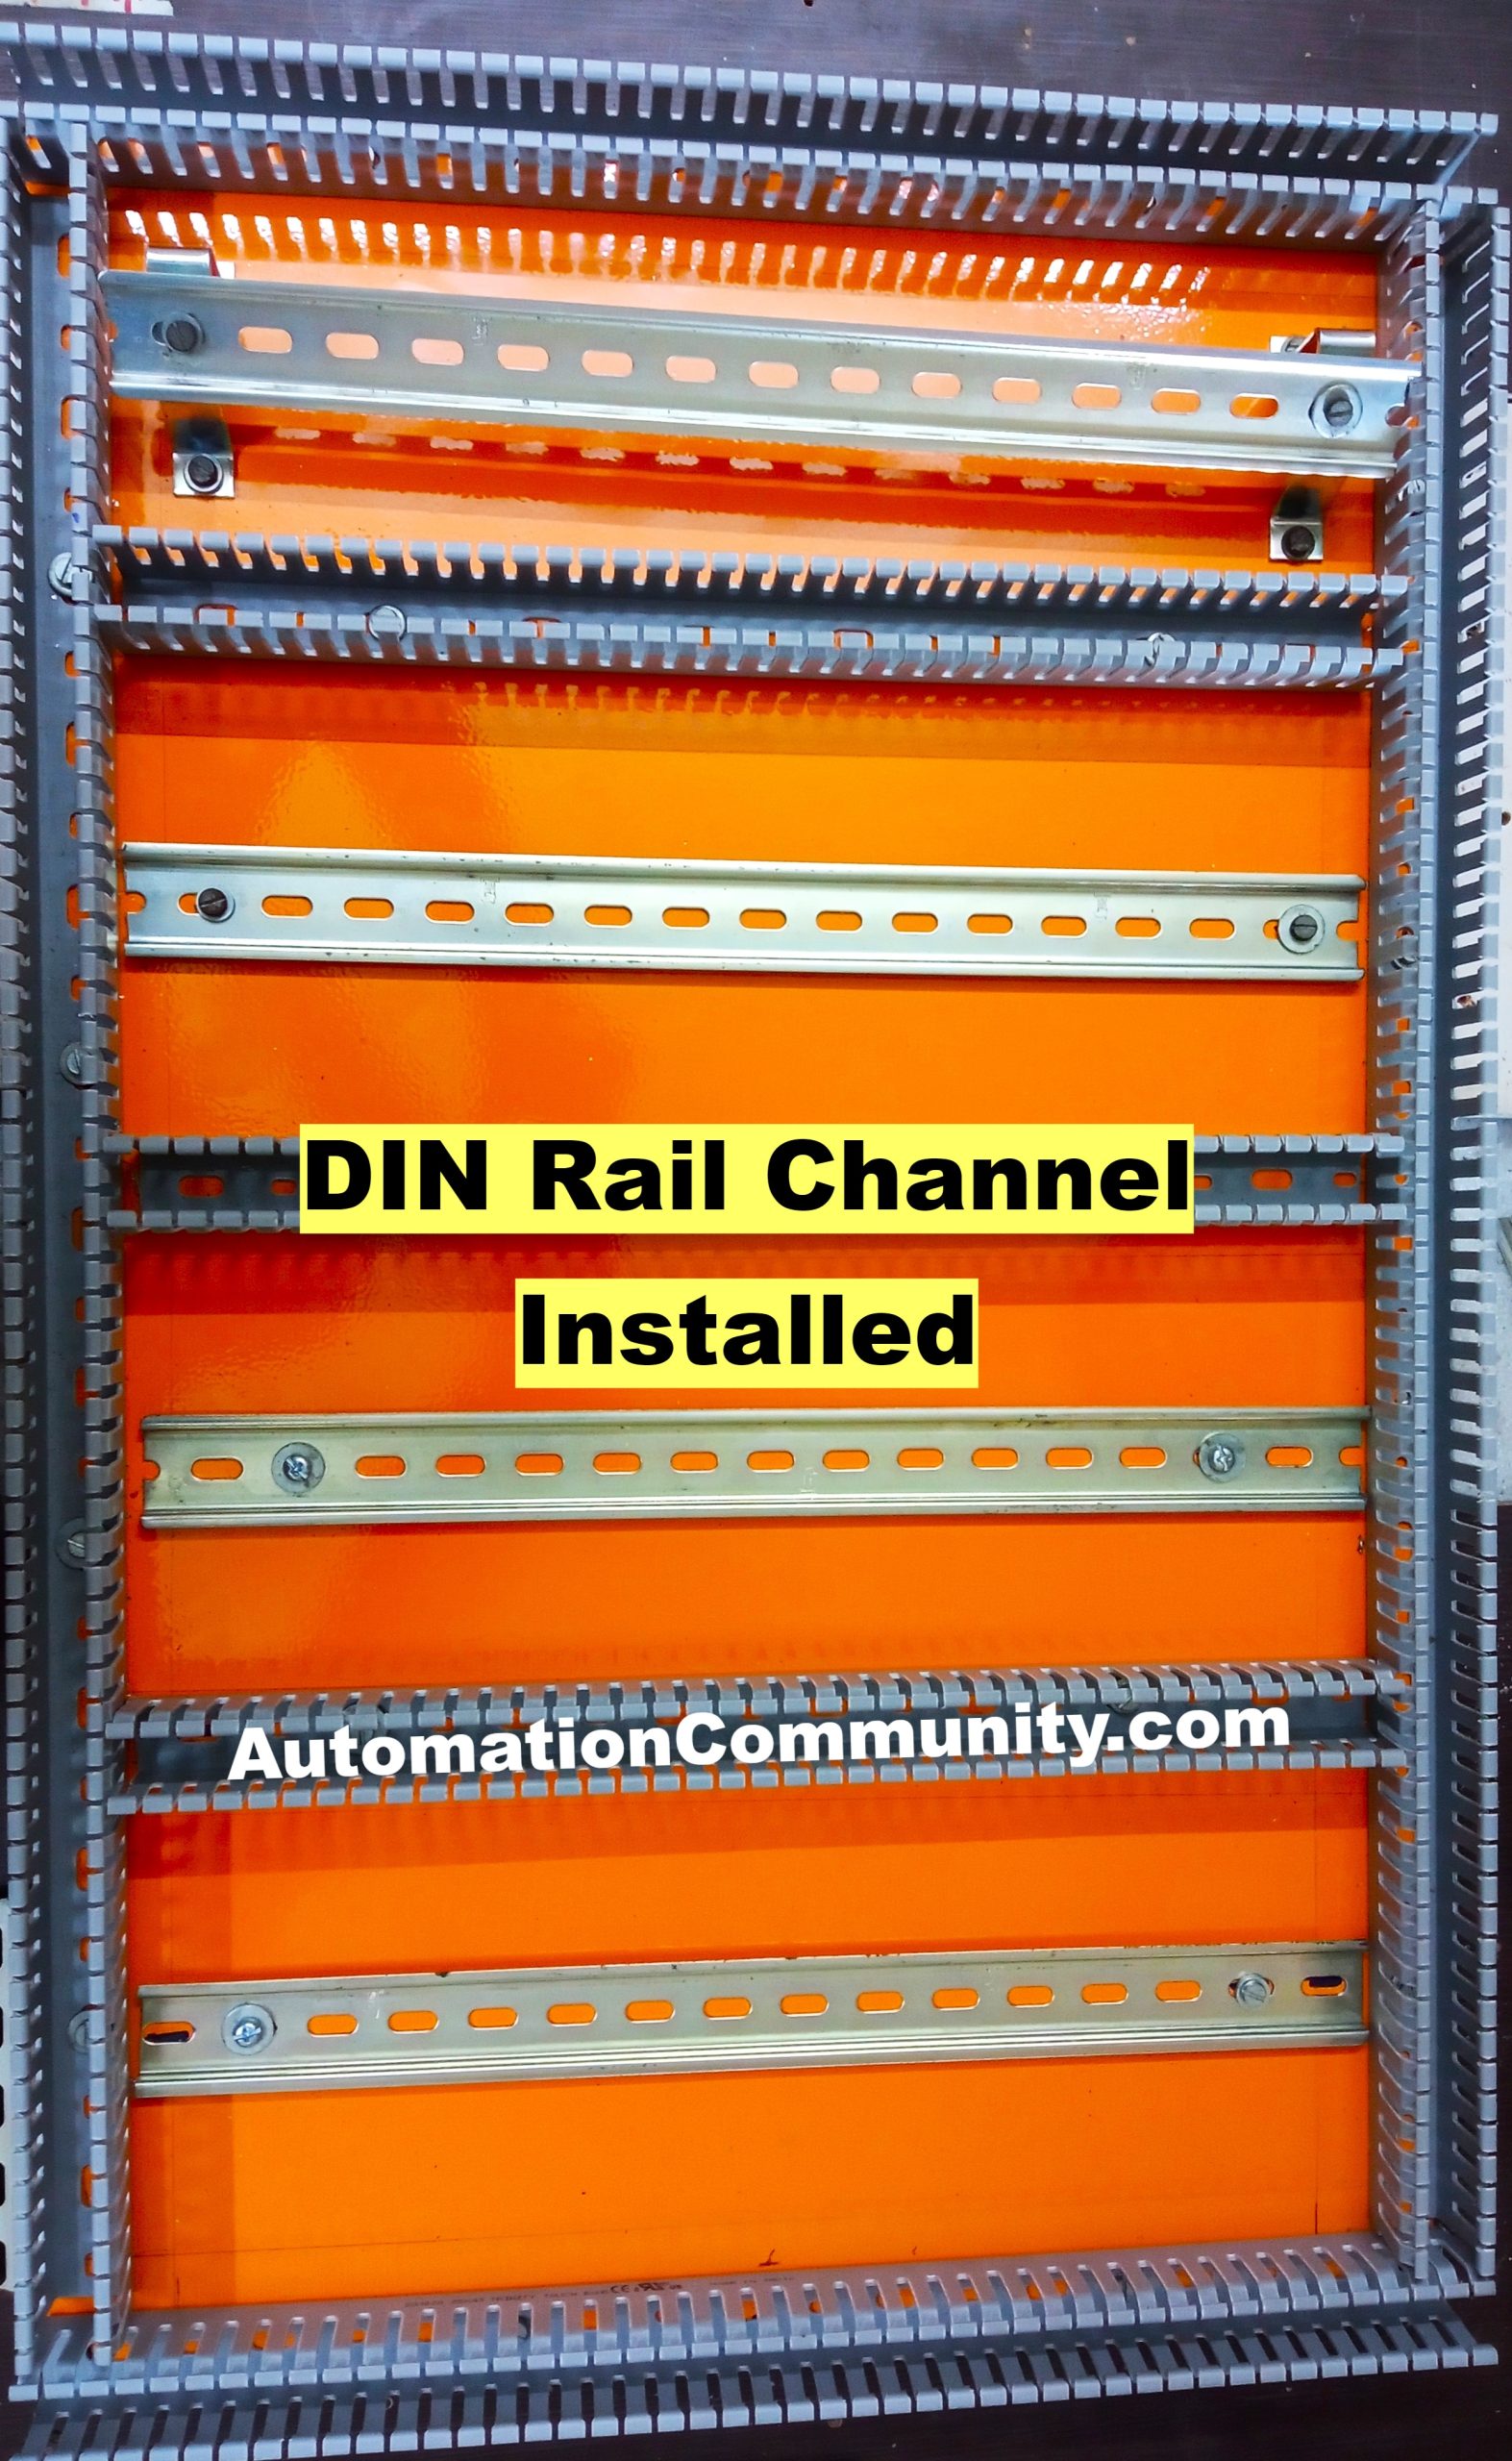 Installation of DIN Rail Channel